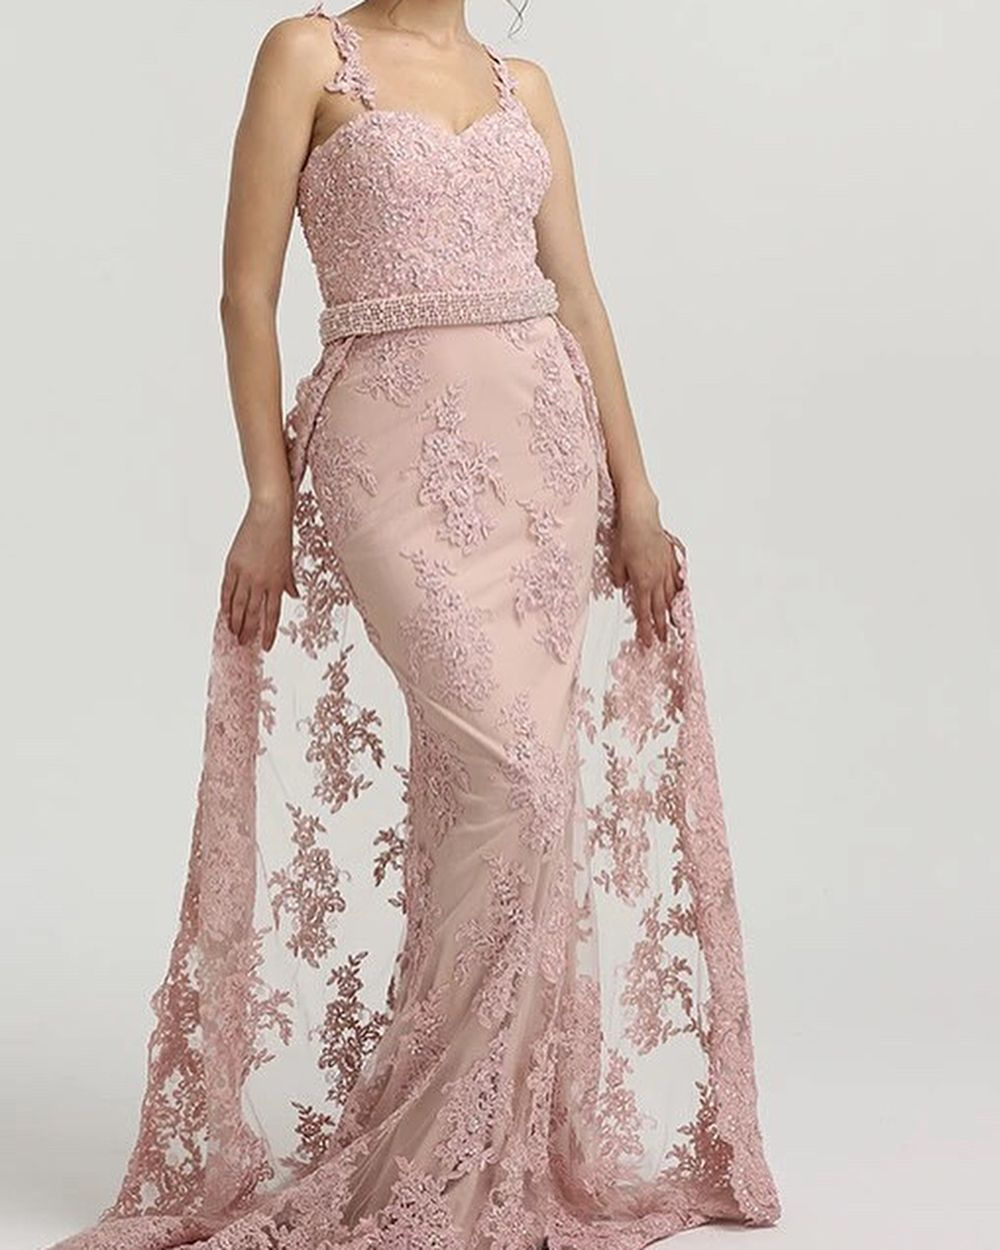 Formal Elegant Abendkleider Lang Rosa Stylish17 Luxus Abendkleider Lang Rosa Spezialgebiet